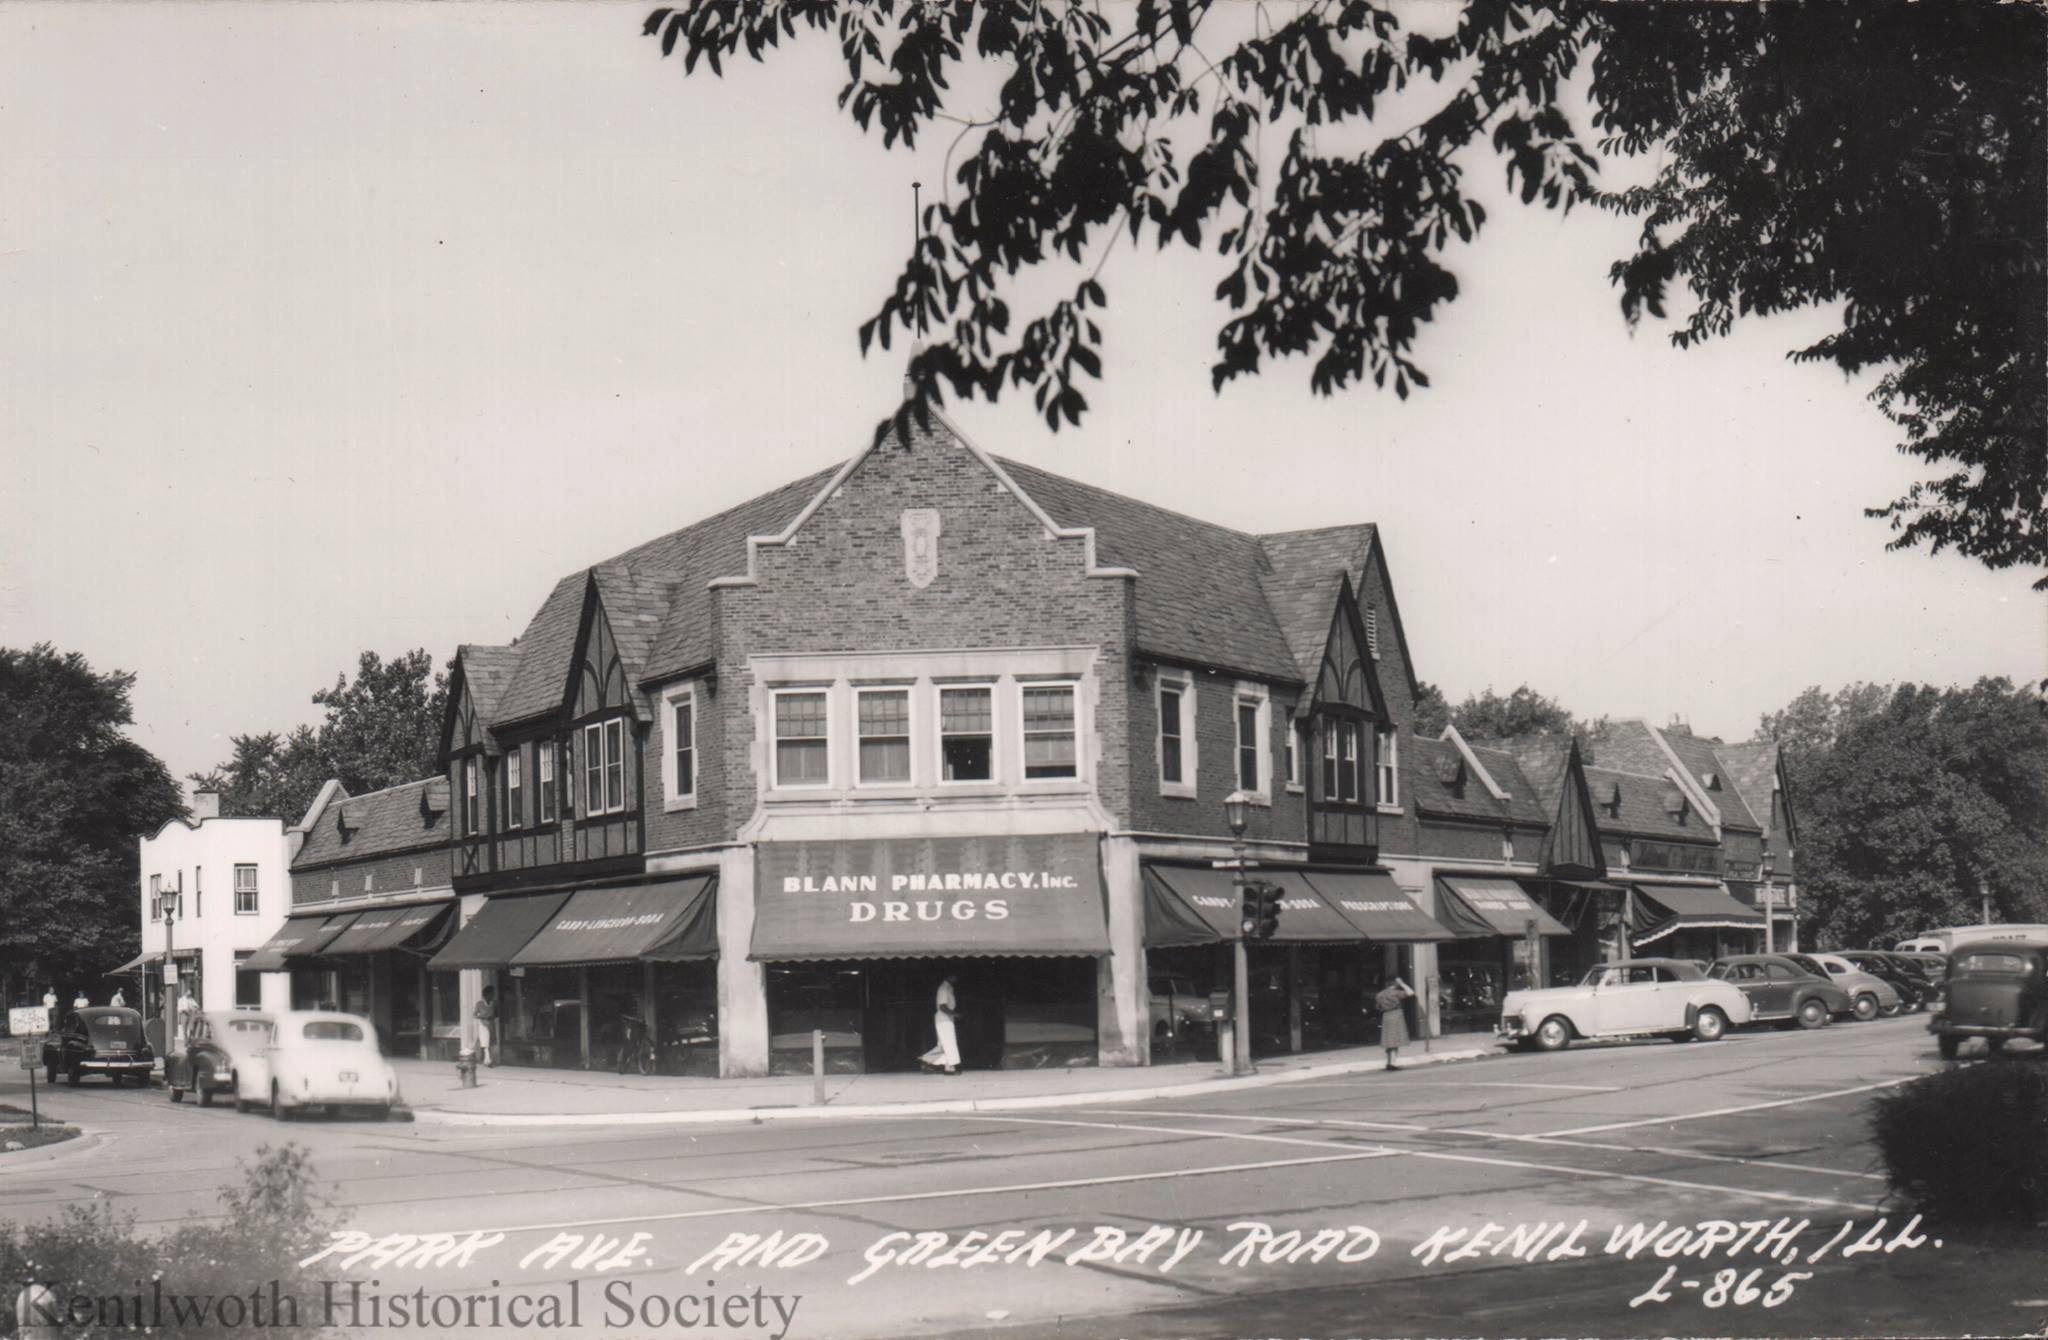 Blann's Pharmacy, a black and white photo